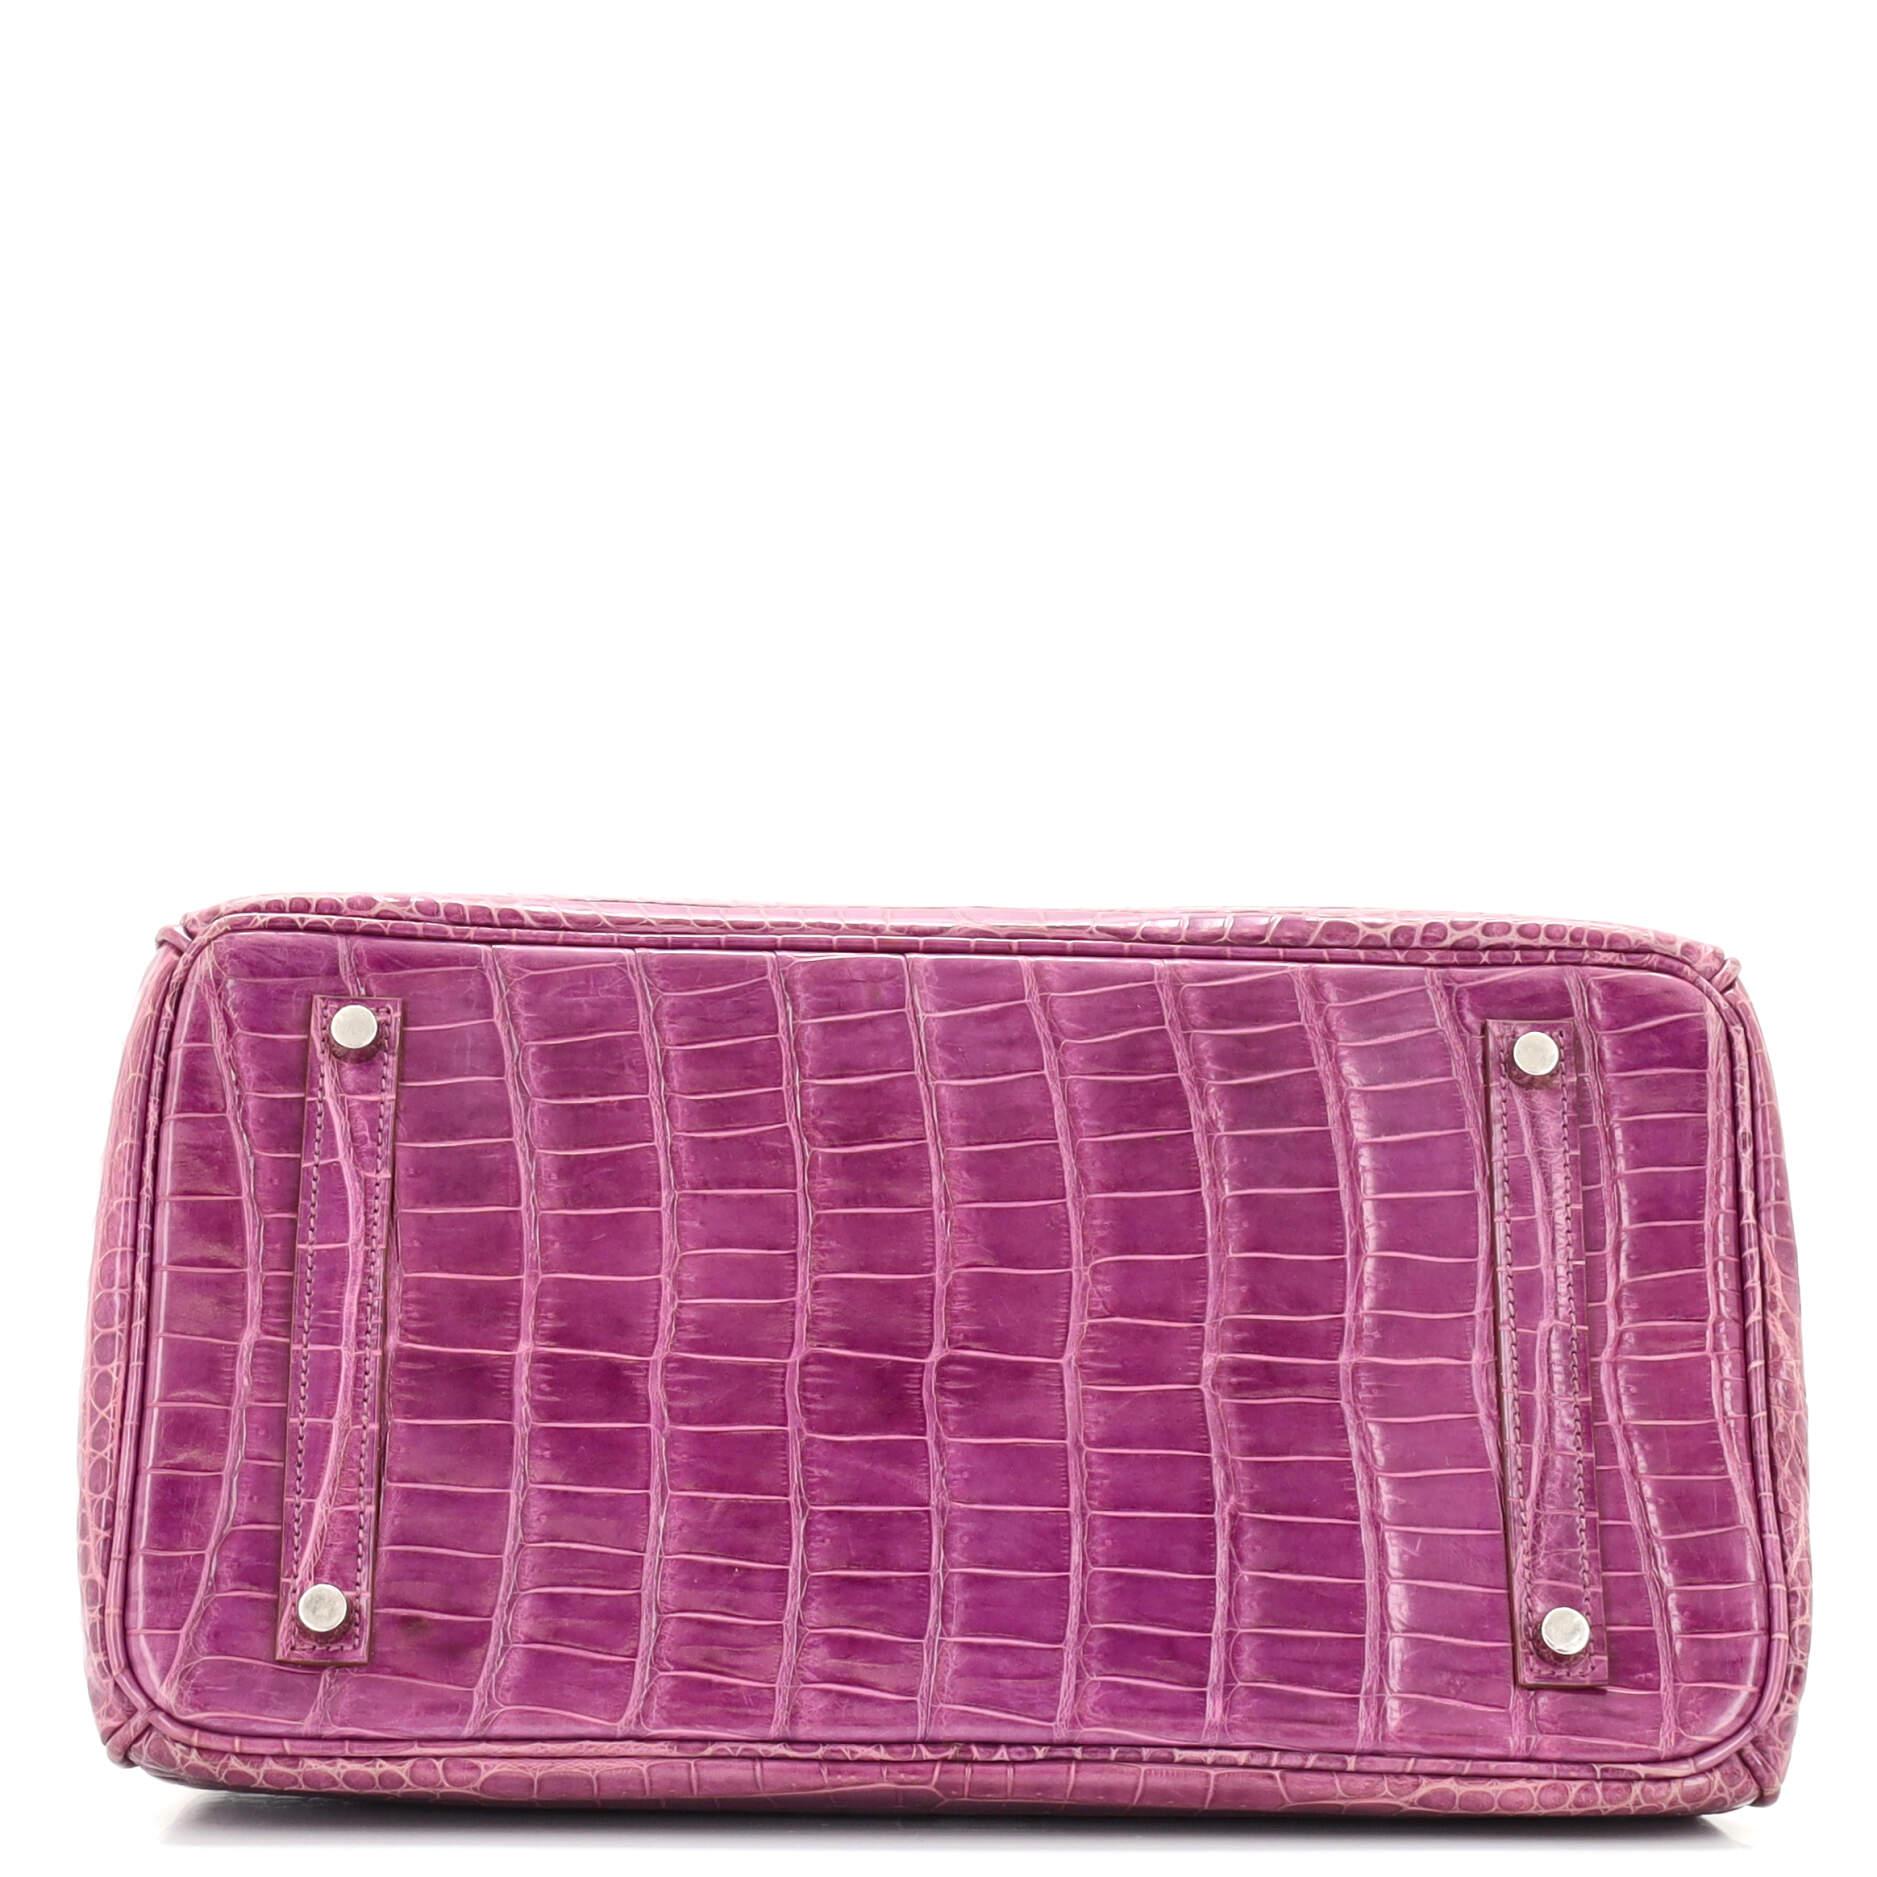 Pink Hermes Birkin Handbag Violet Shiny Porosus Crocodile with Palladium Hardware 35